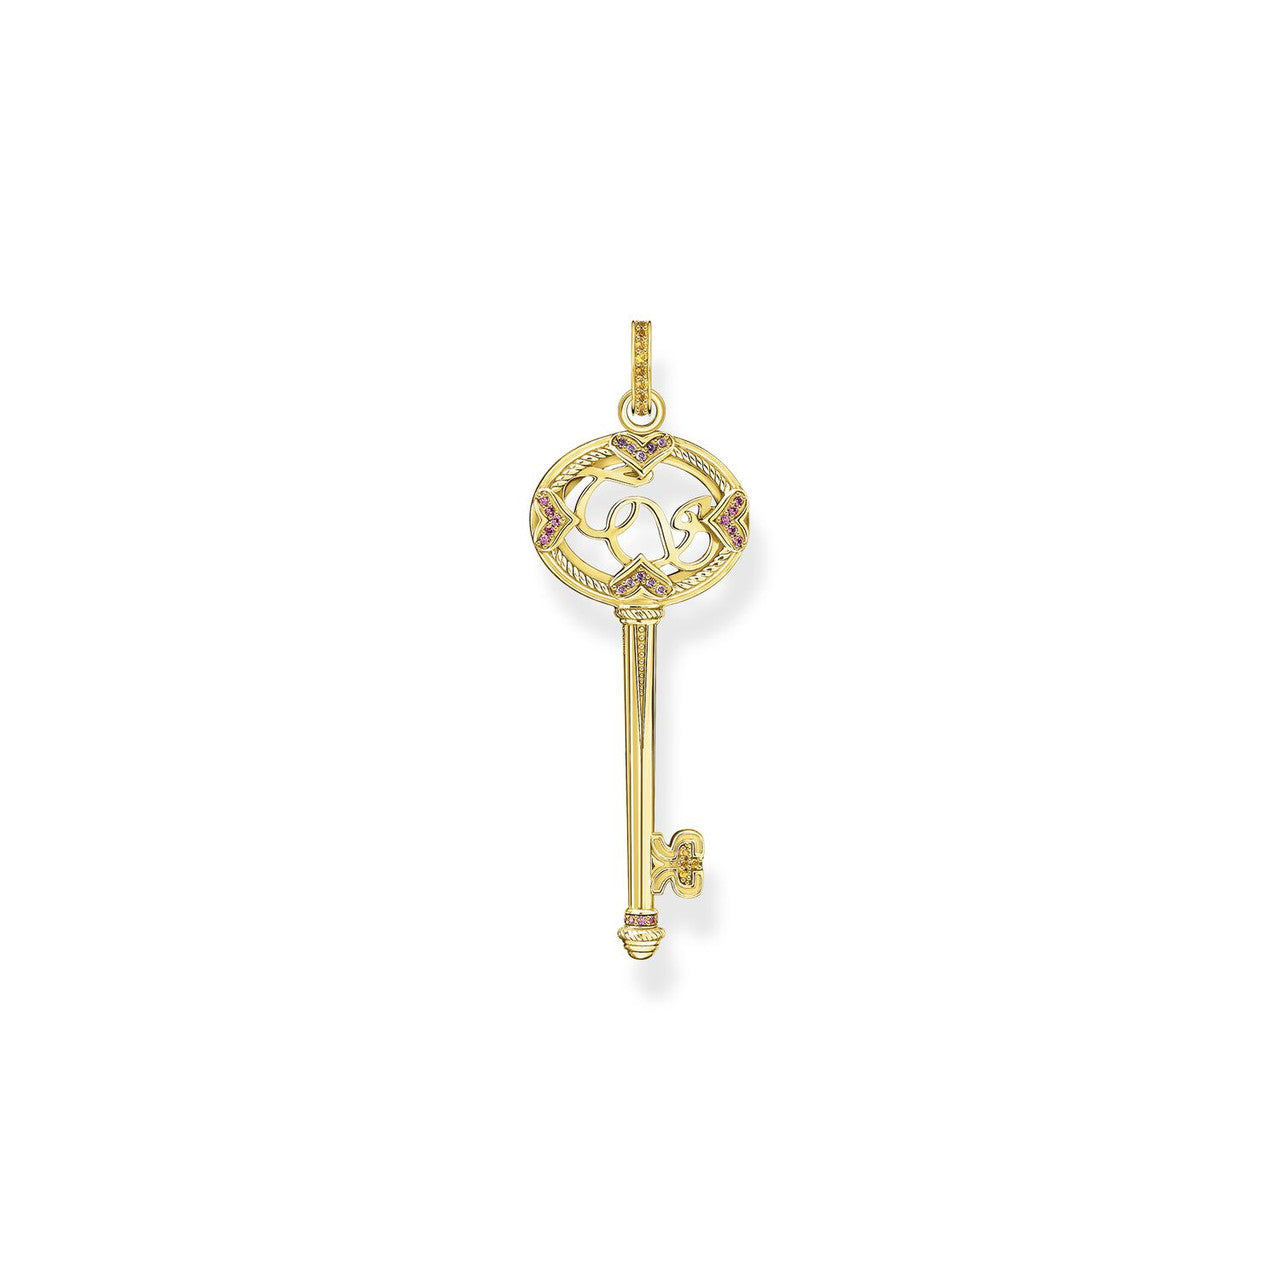 THOMAS SABO Pendant Key Gold -  PE895-973-7 | Ice Jewellery Australia